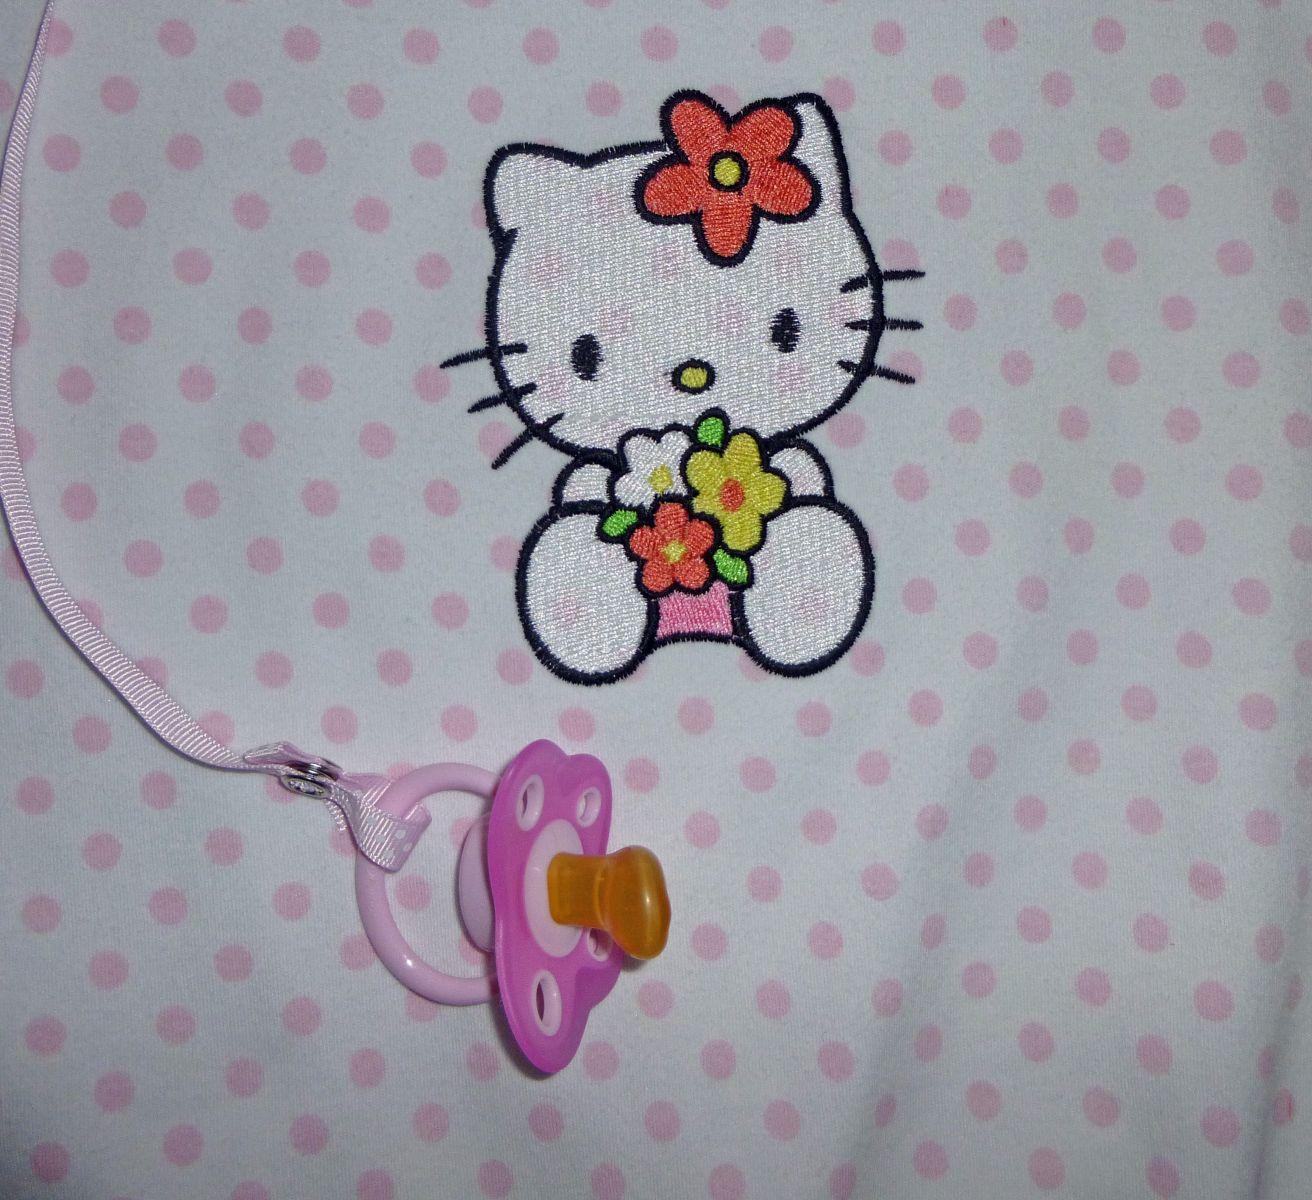 Embroidered Hello kitty design